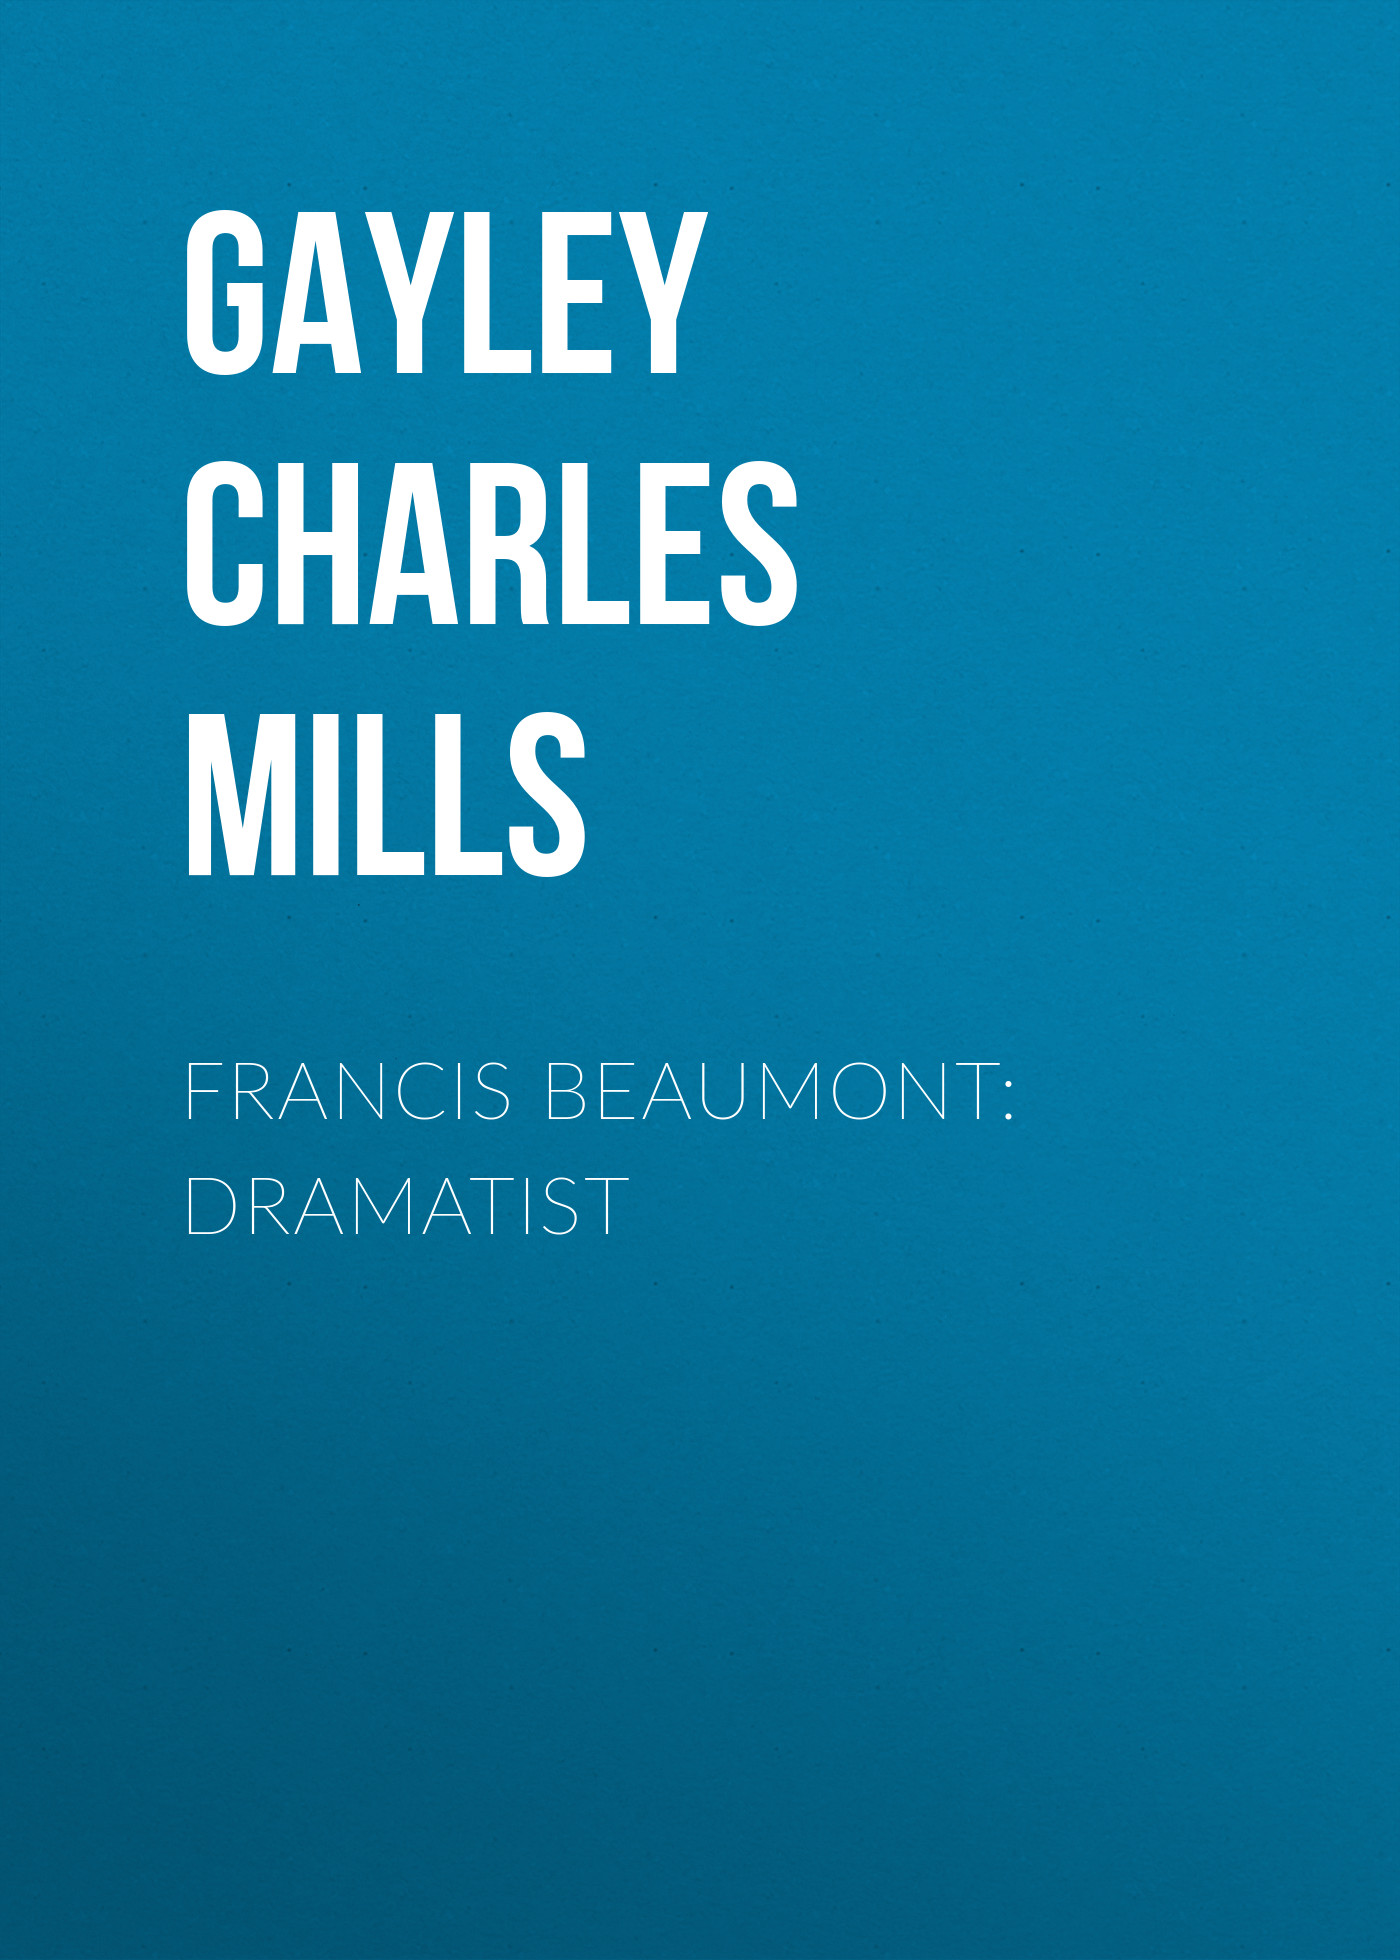 Francis Beaumont: Dramatist